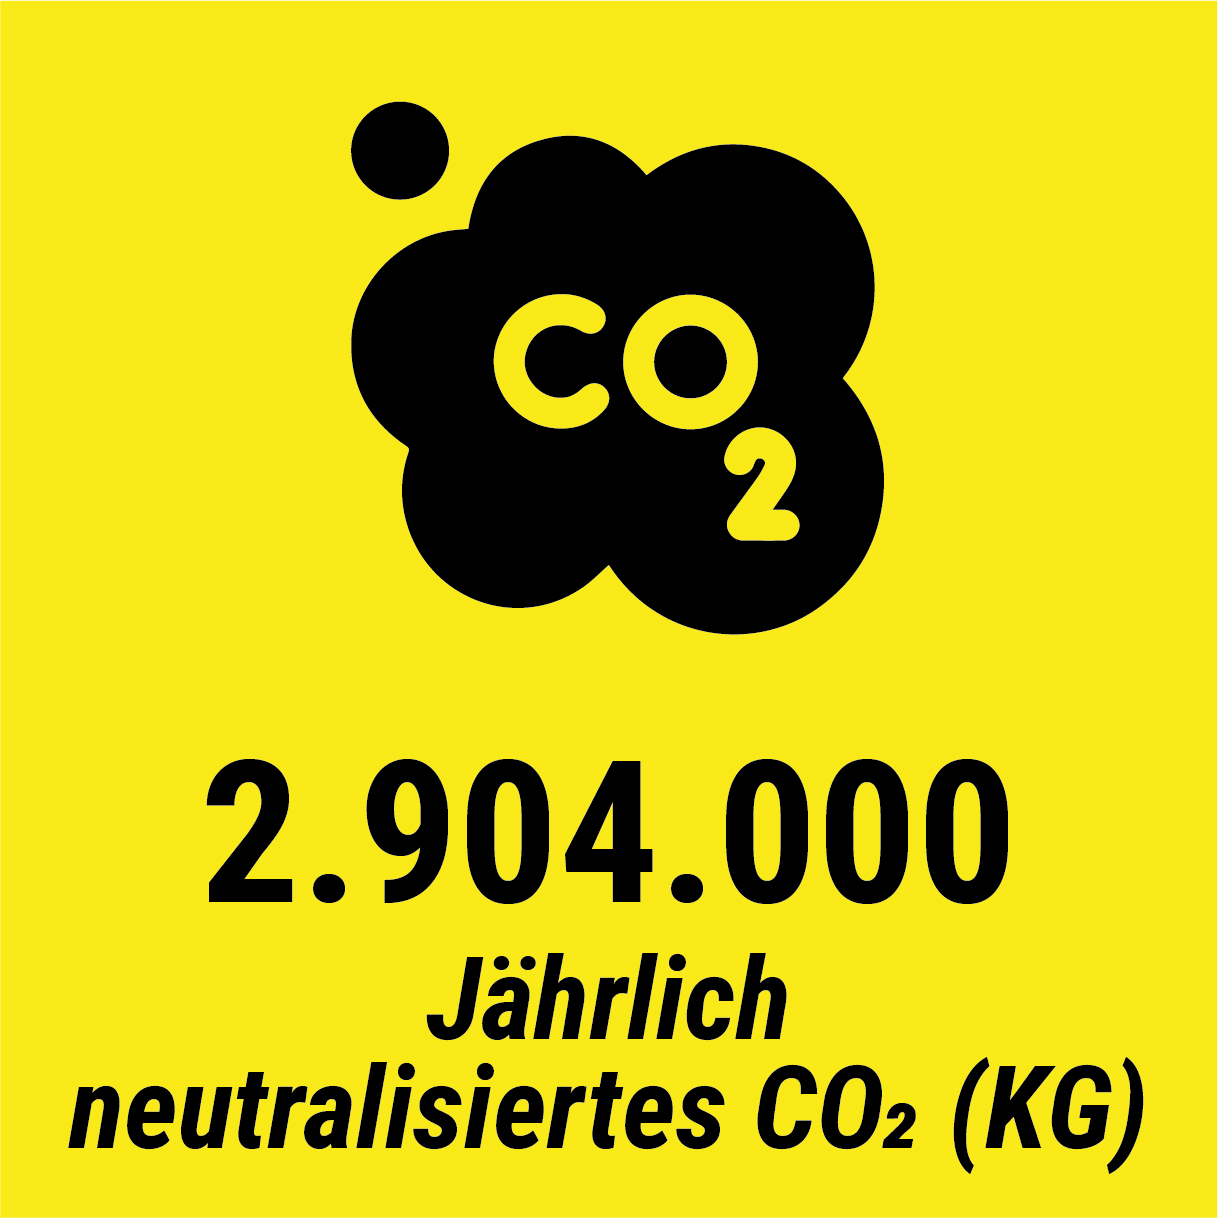 Neutralisiertes CO2 \(Kg\): 2.904.000